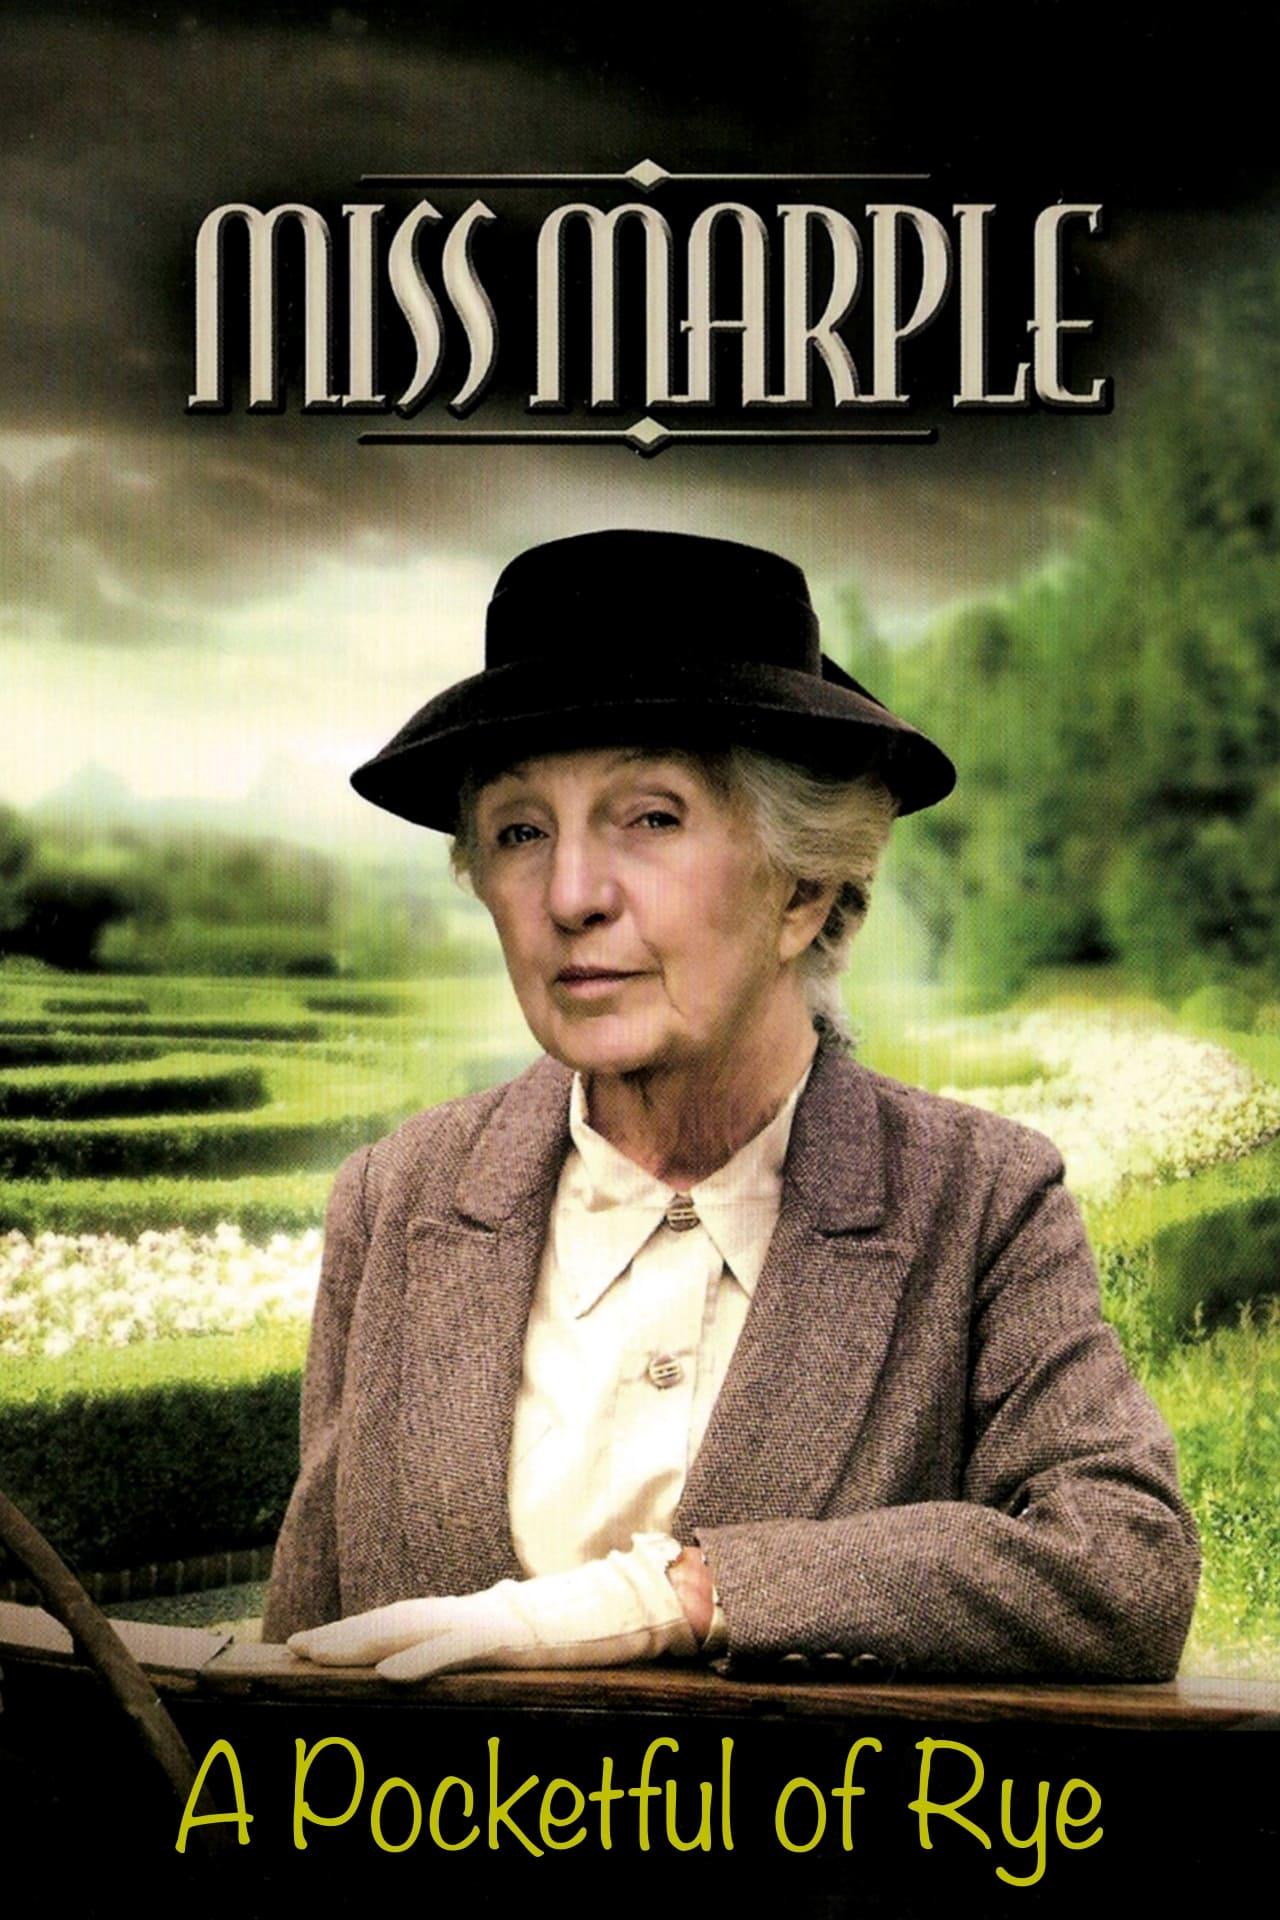 Miss Marple: A Pocketful of Rye poster